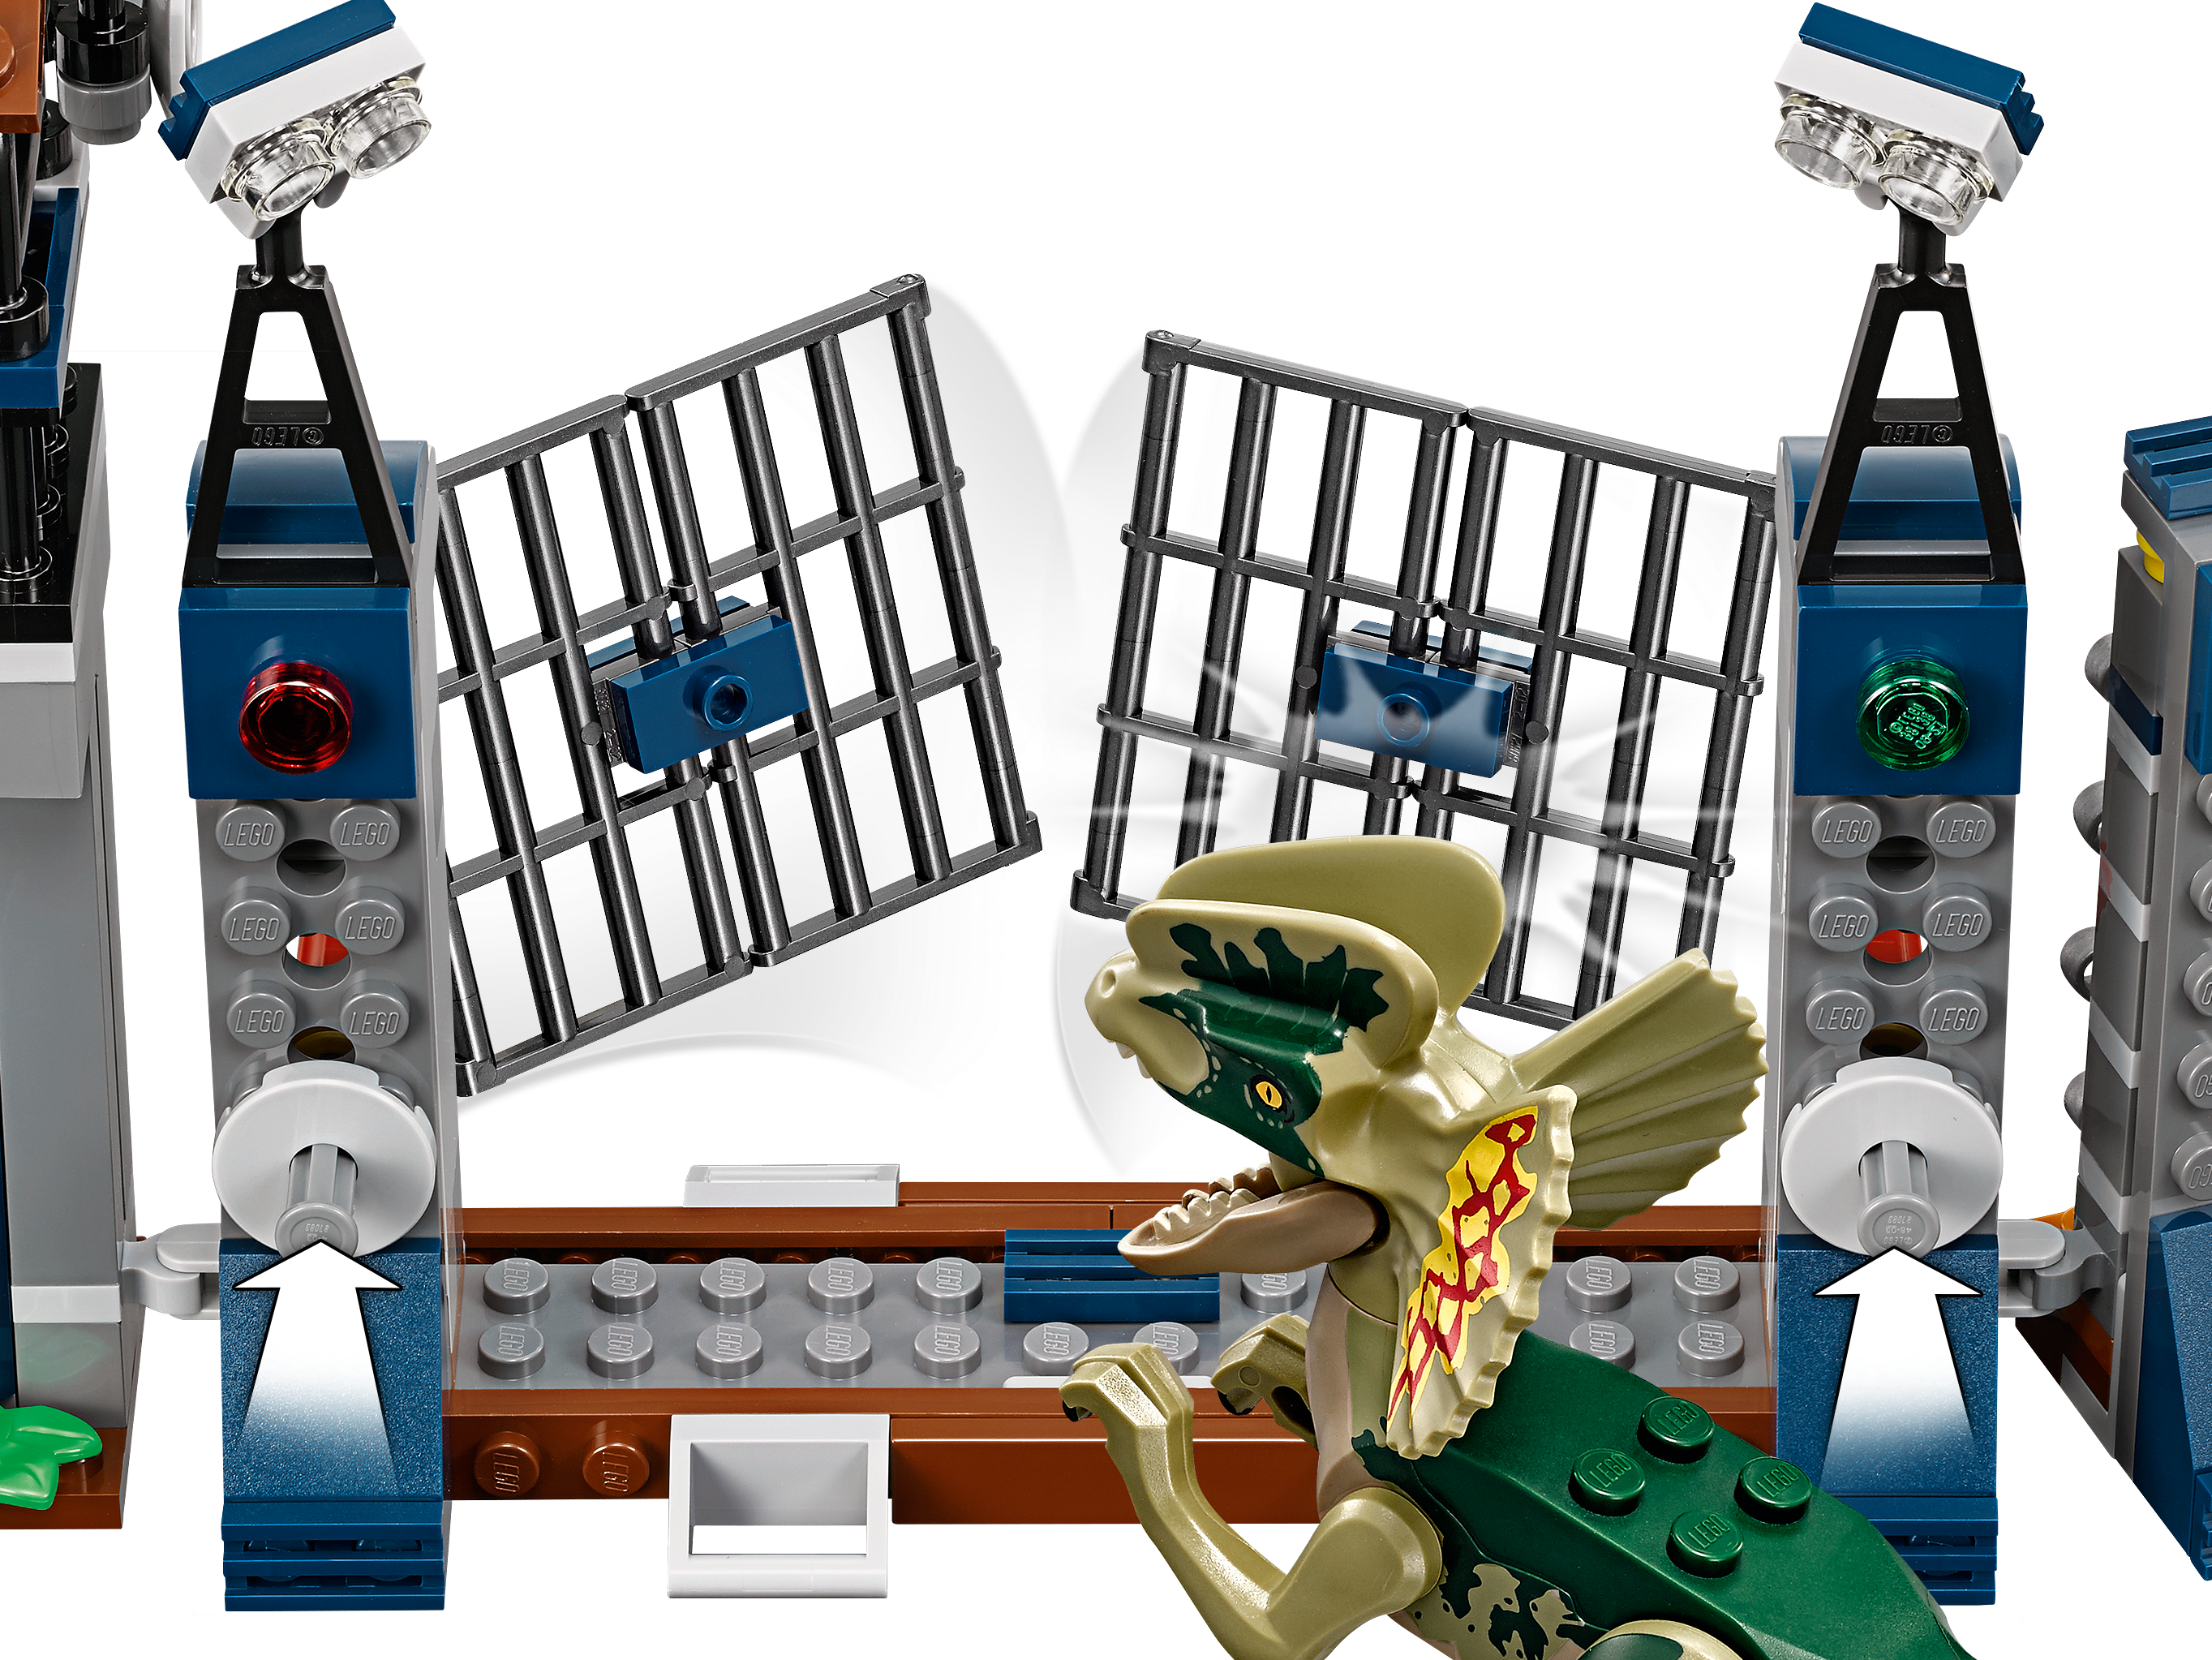 Lego Jurassic World Dilophosaurus Outpost Attack 75931 for sale online 